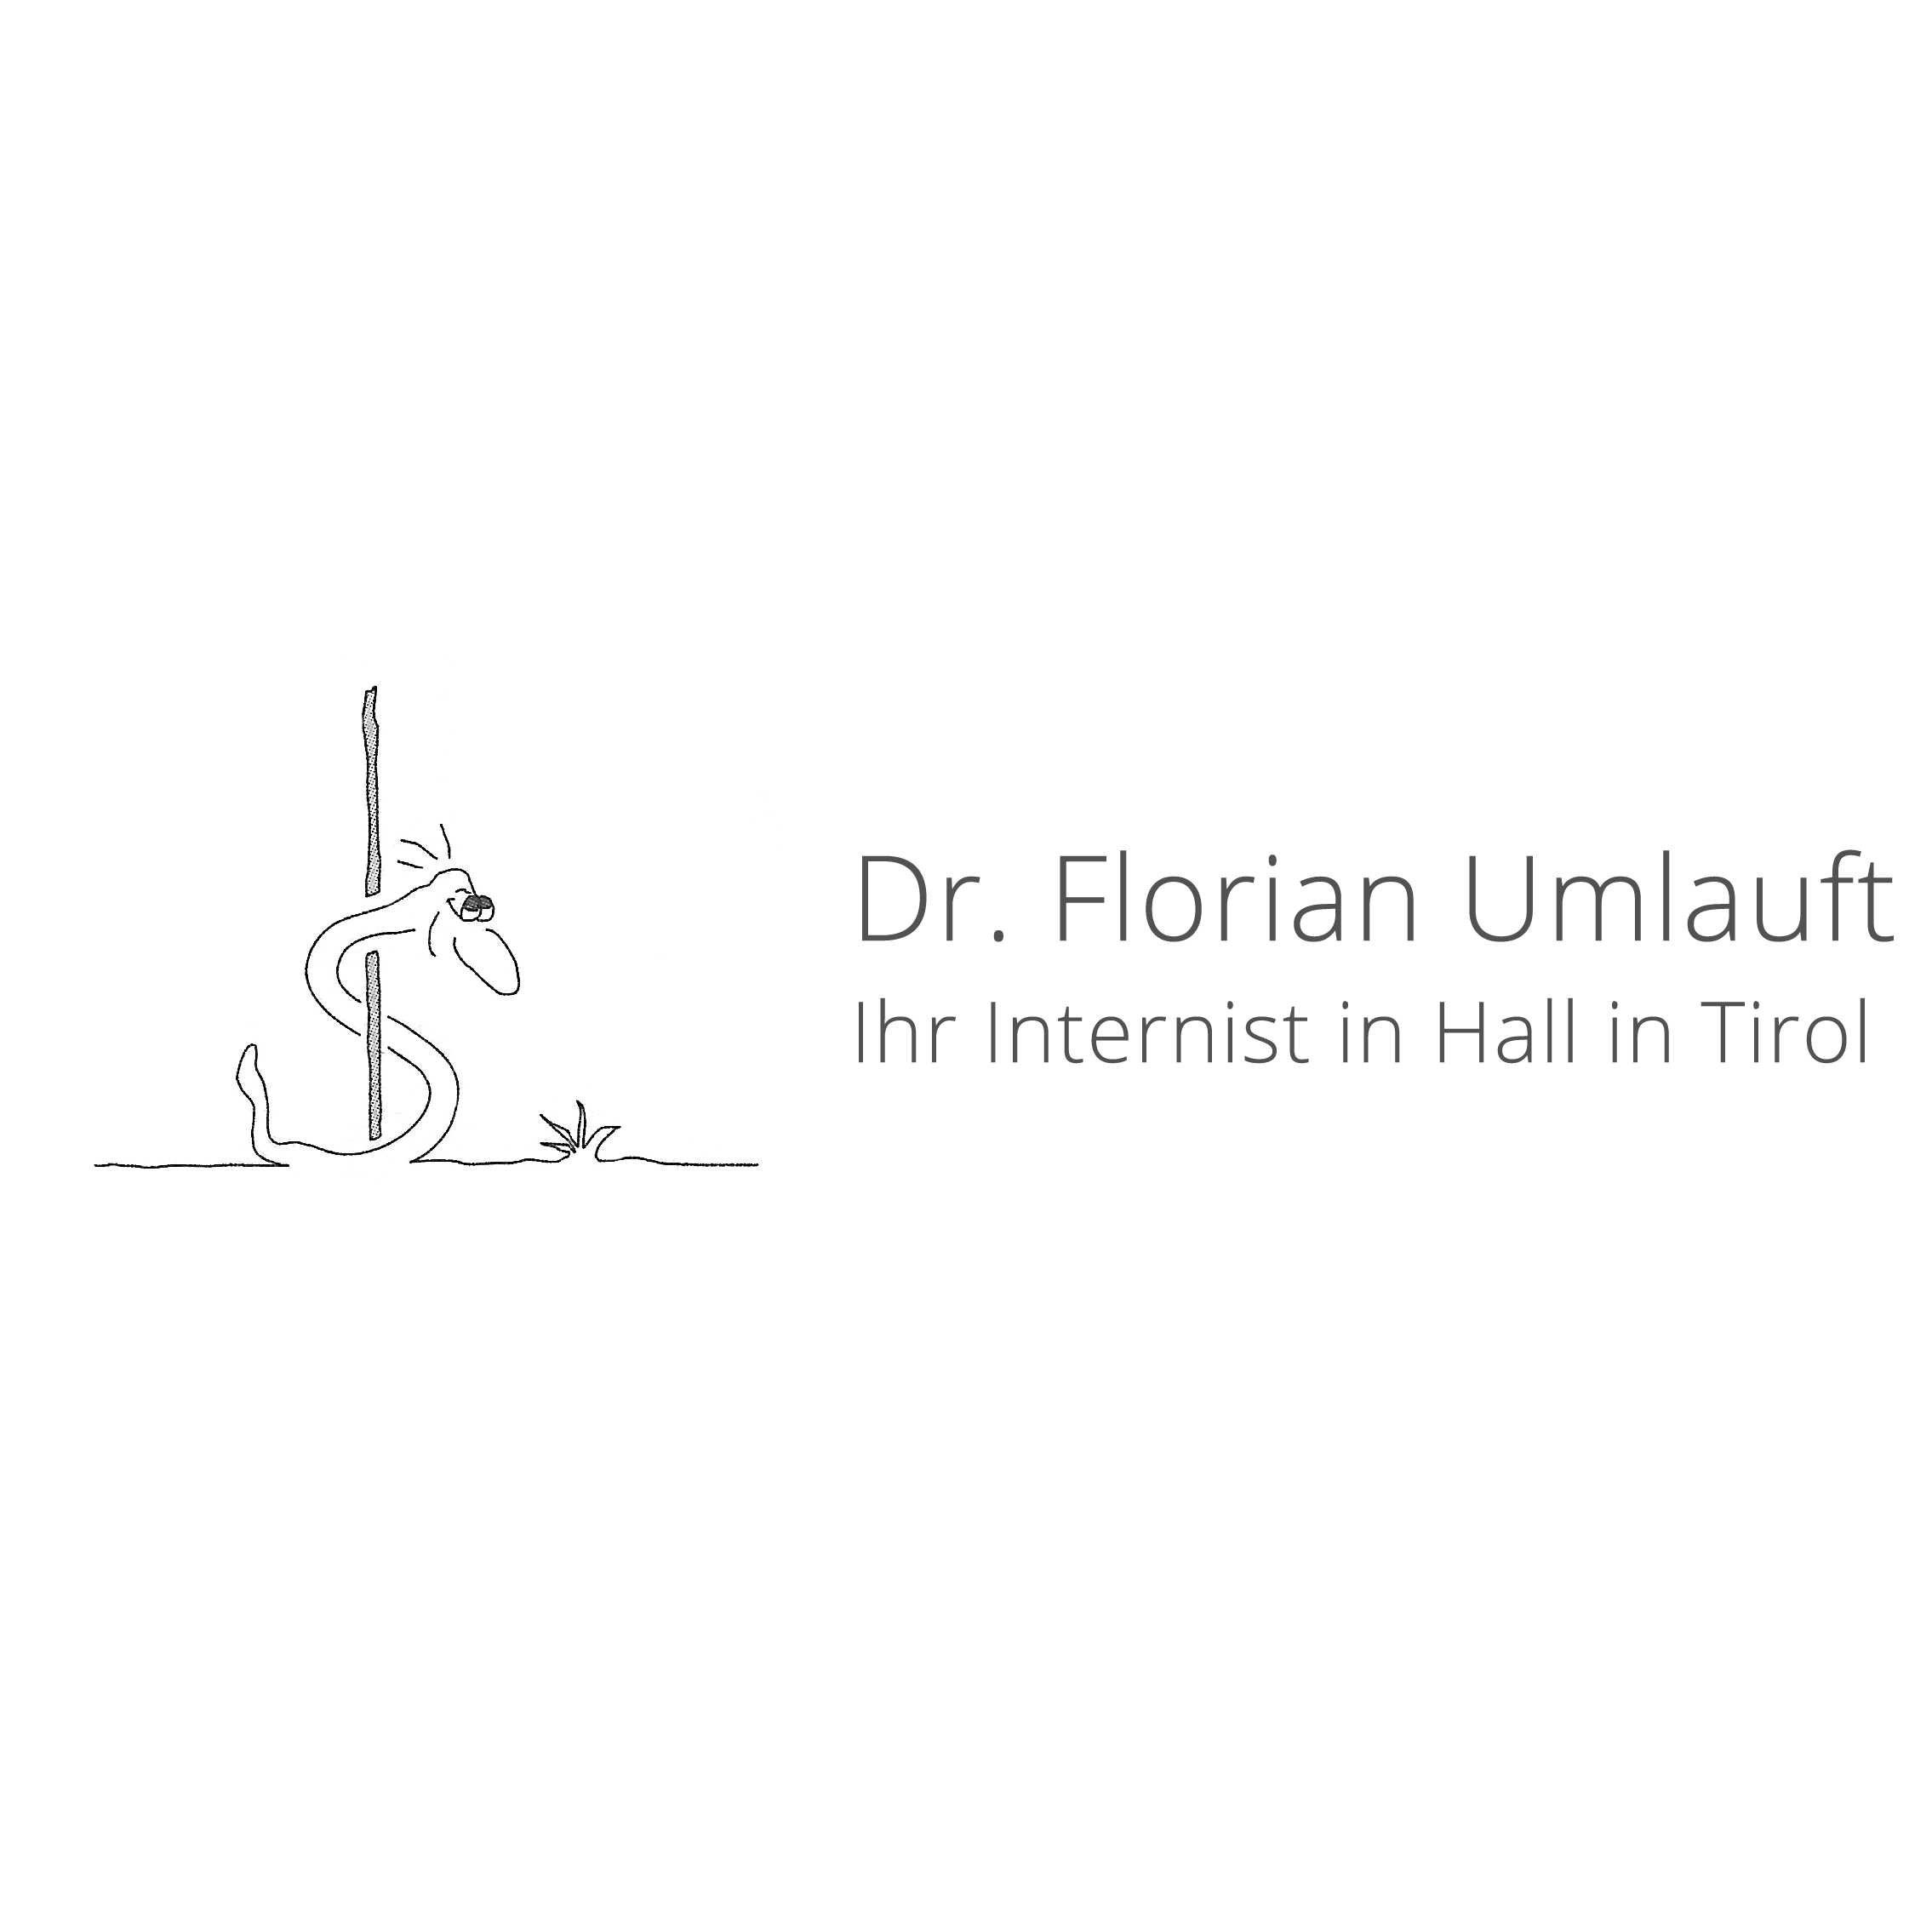 Dr. Florian Umlauft